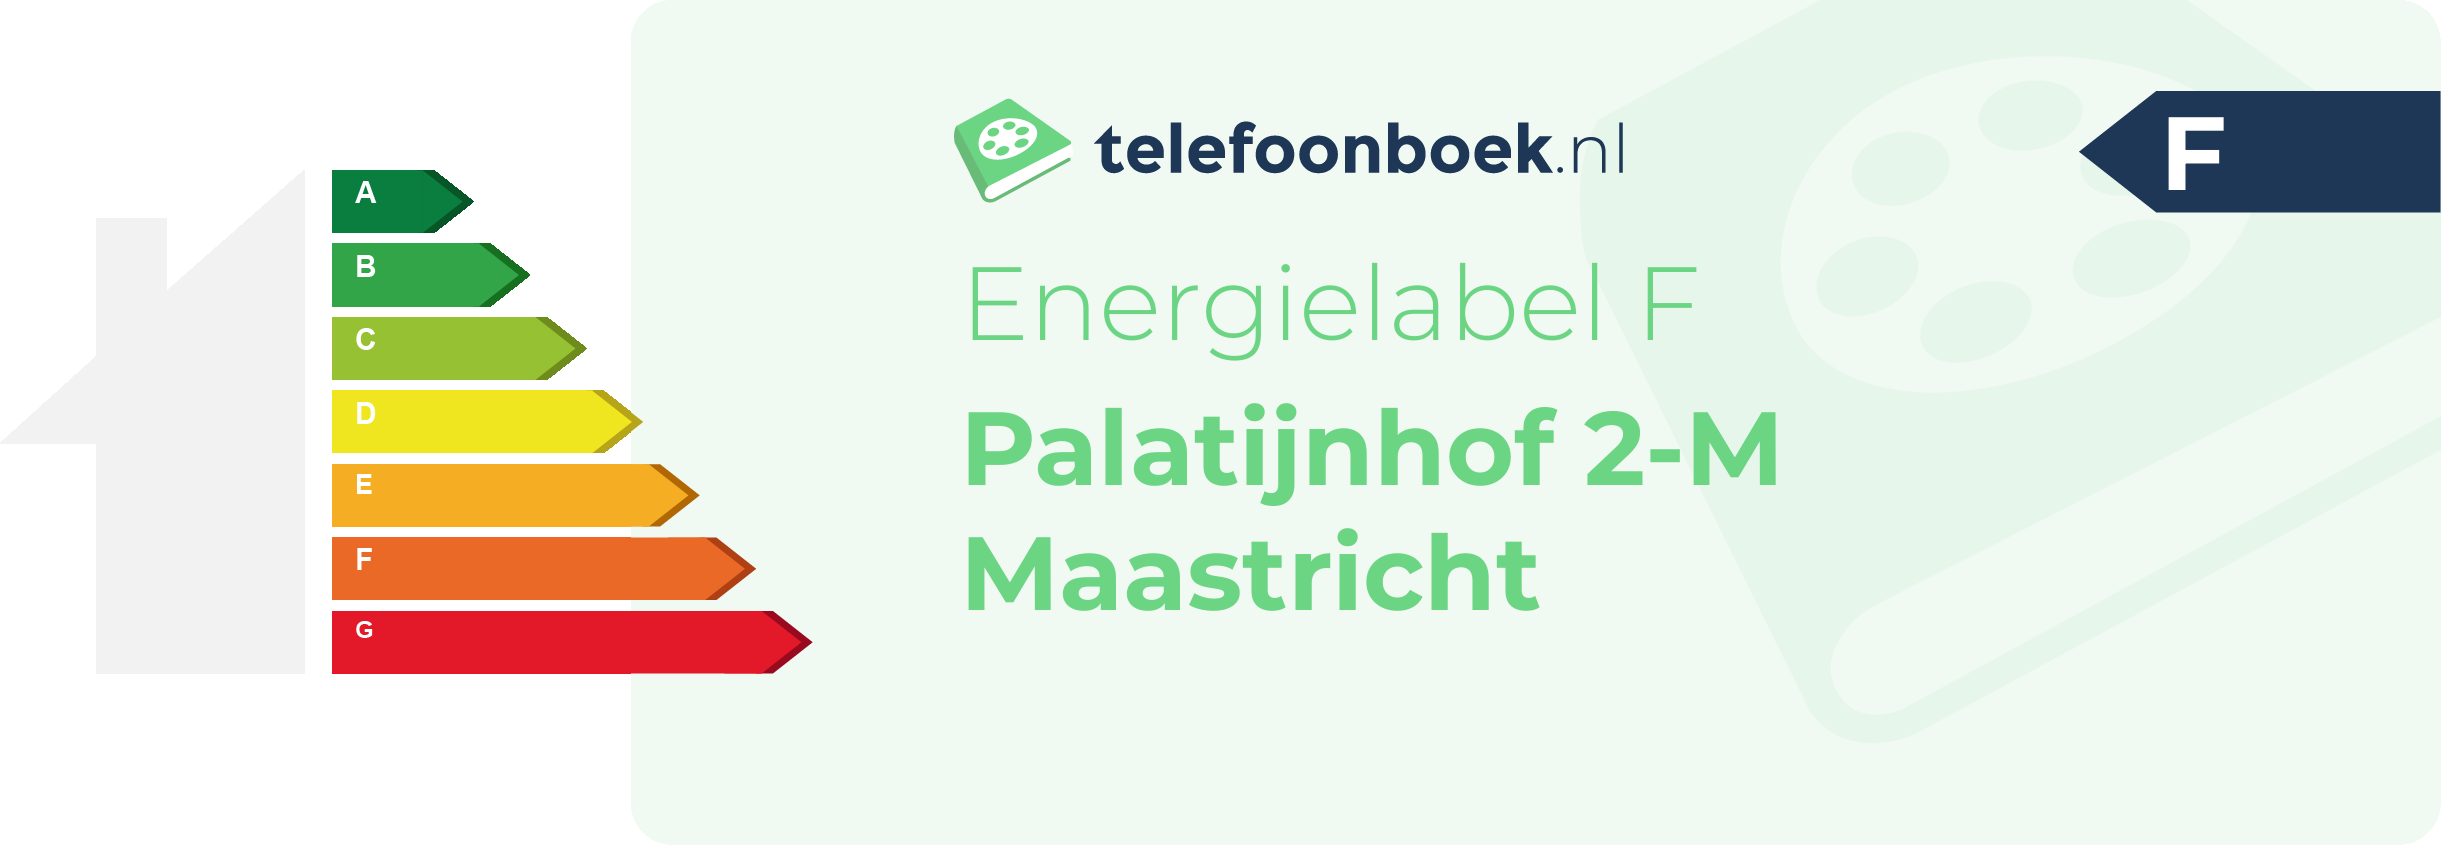 Energielabel Palatijnhof 2-M Maastricht